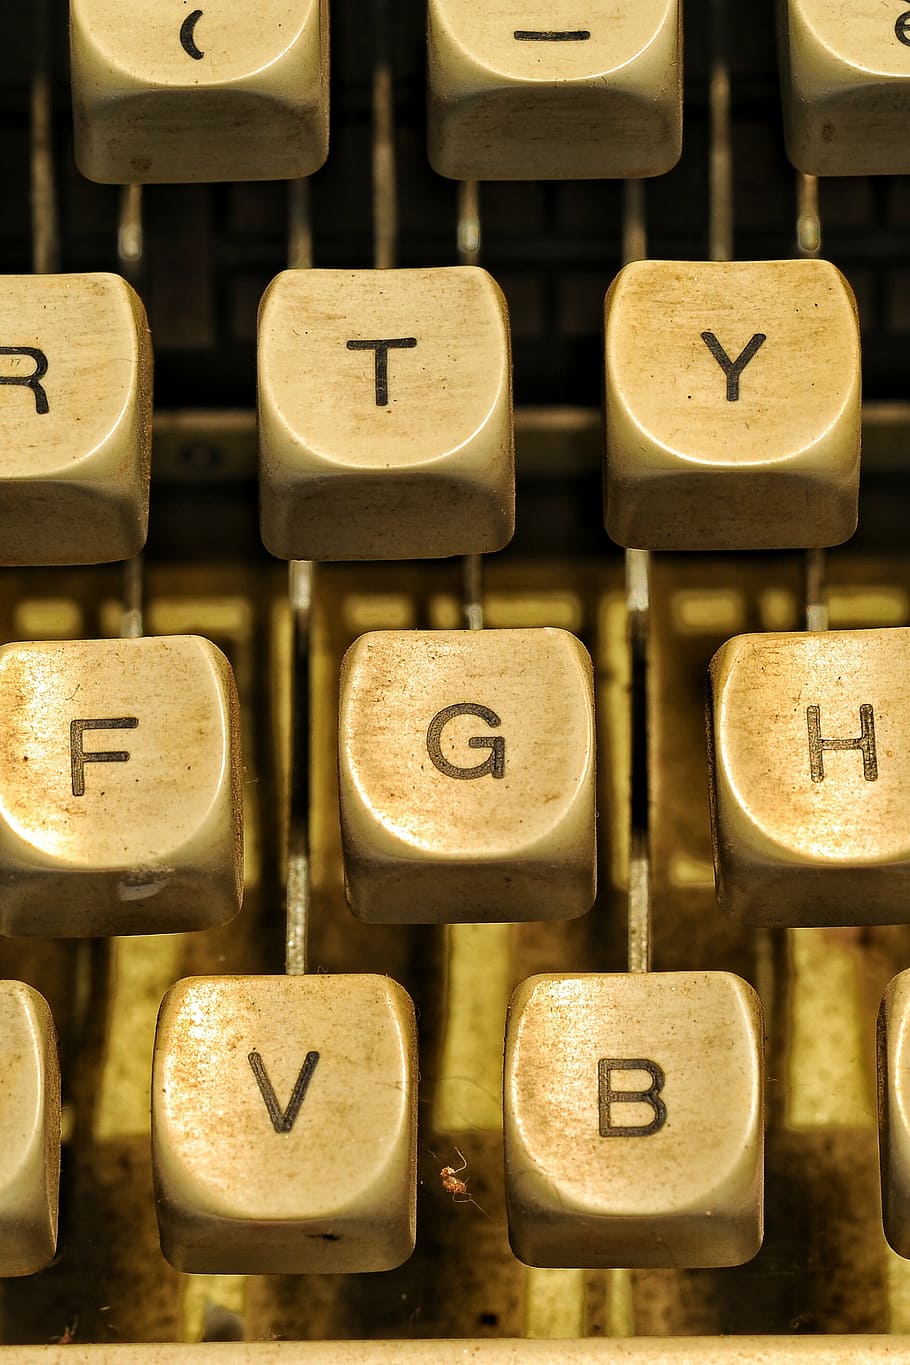 y, f, g, h, v, b typewriter keys, letters, machine, writing, texture